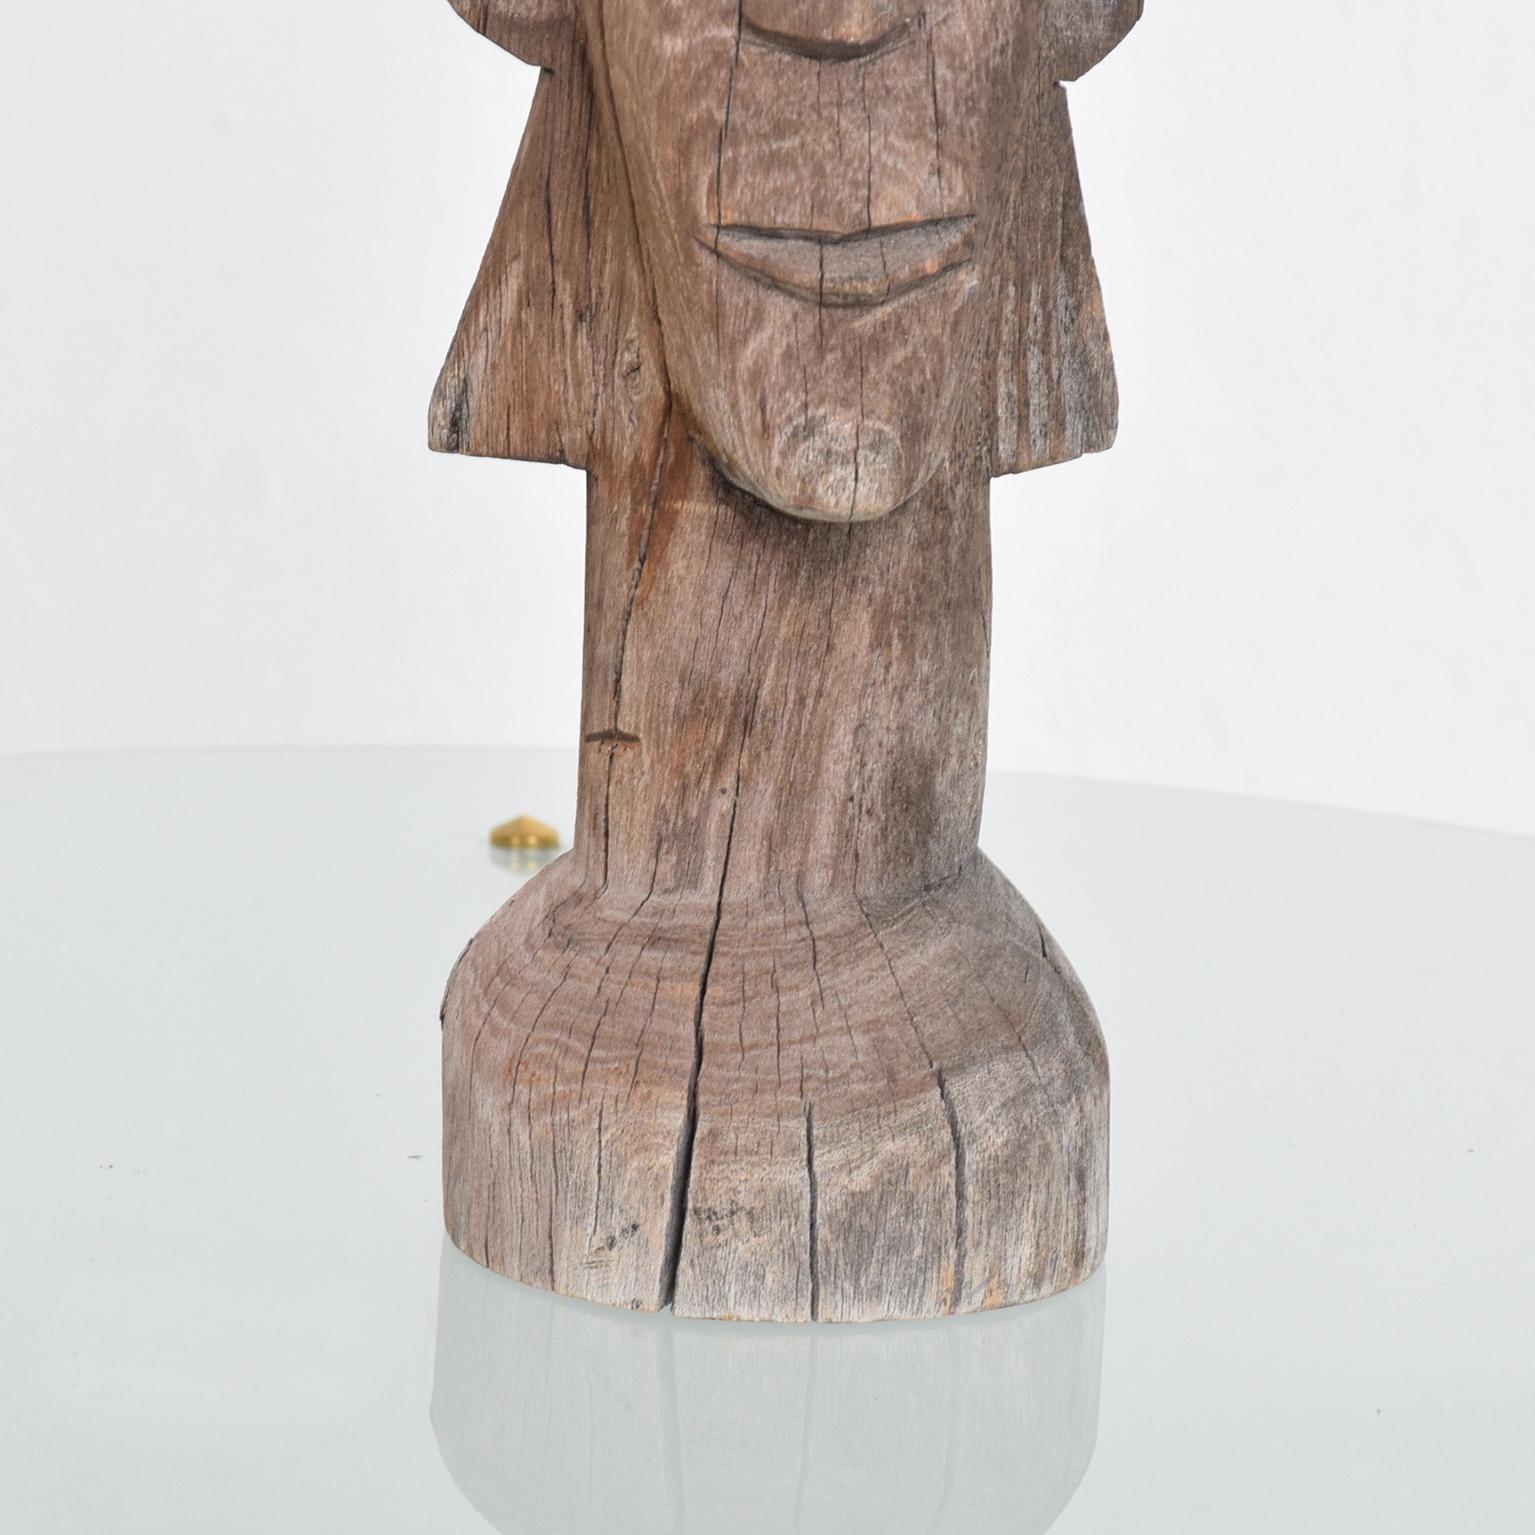 For your consideration: Artisan hand carved wood TOTEM sculpture vintage indigenous primitive artwork

Dimensions: 18 1/2